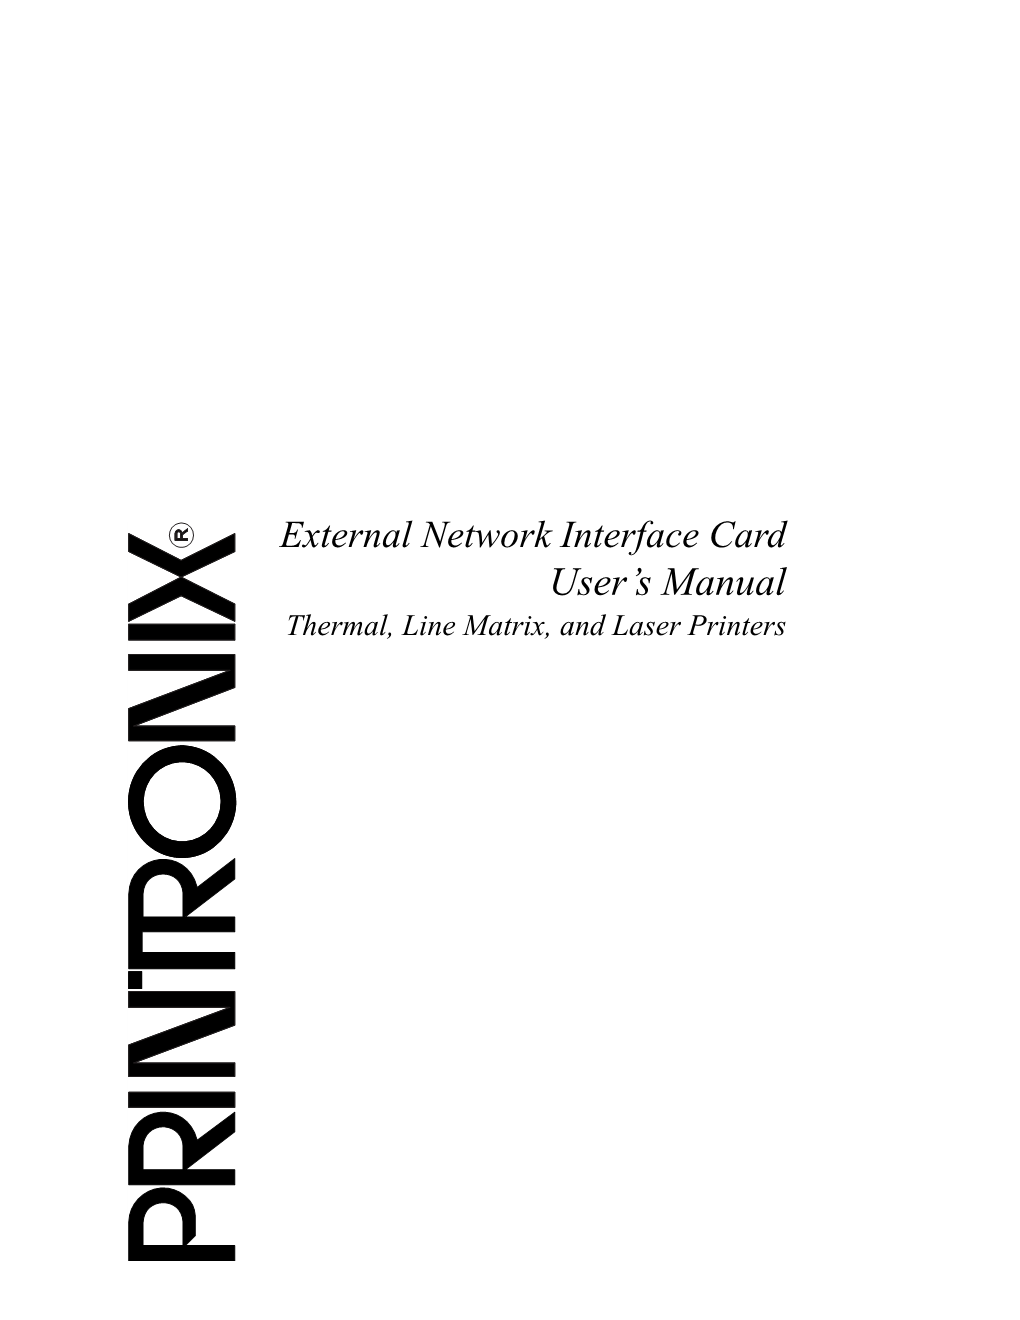 External Network Interface Card User's Manual